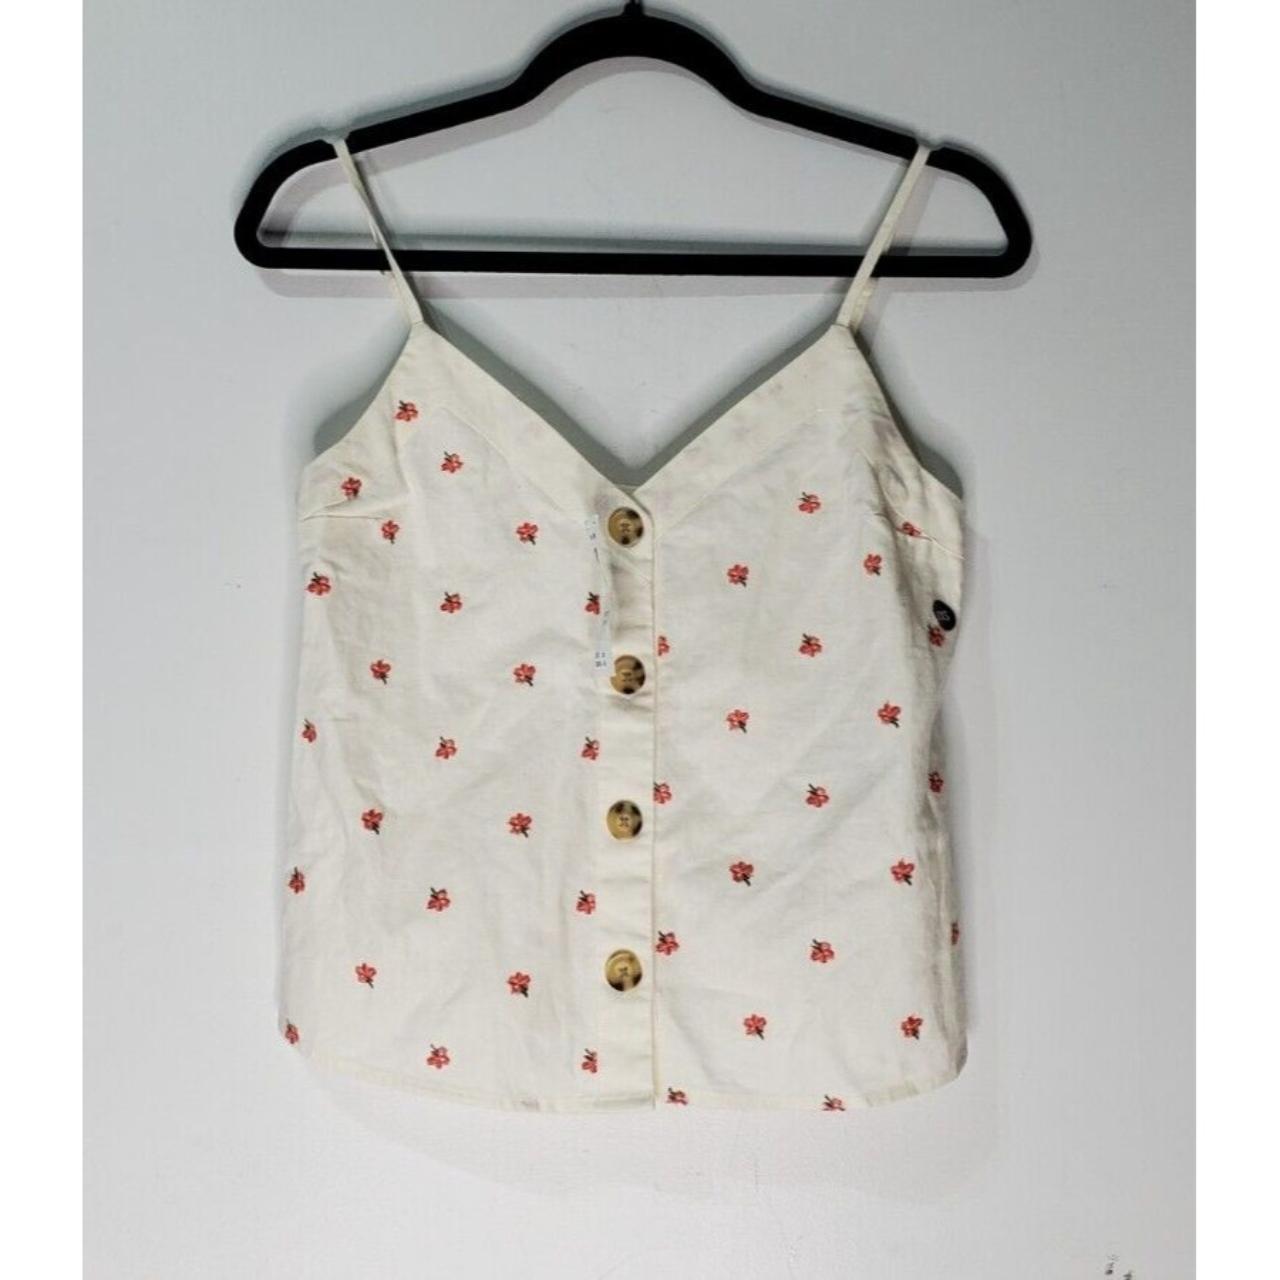 Abercrombie & Fitch Women's Vests-tanks-camis